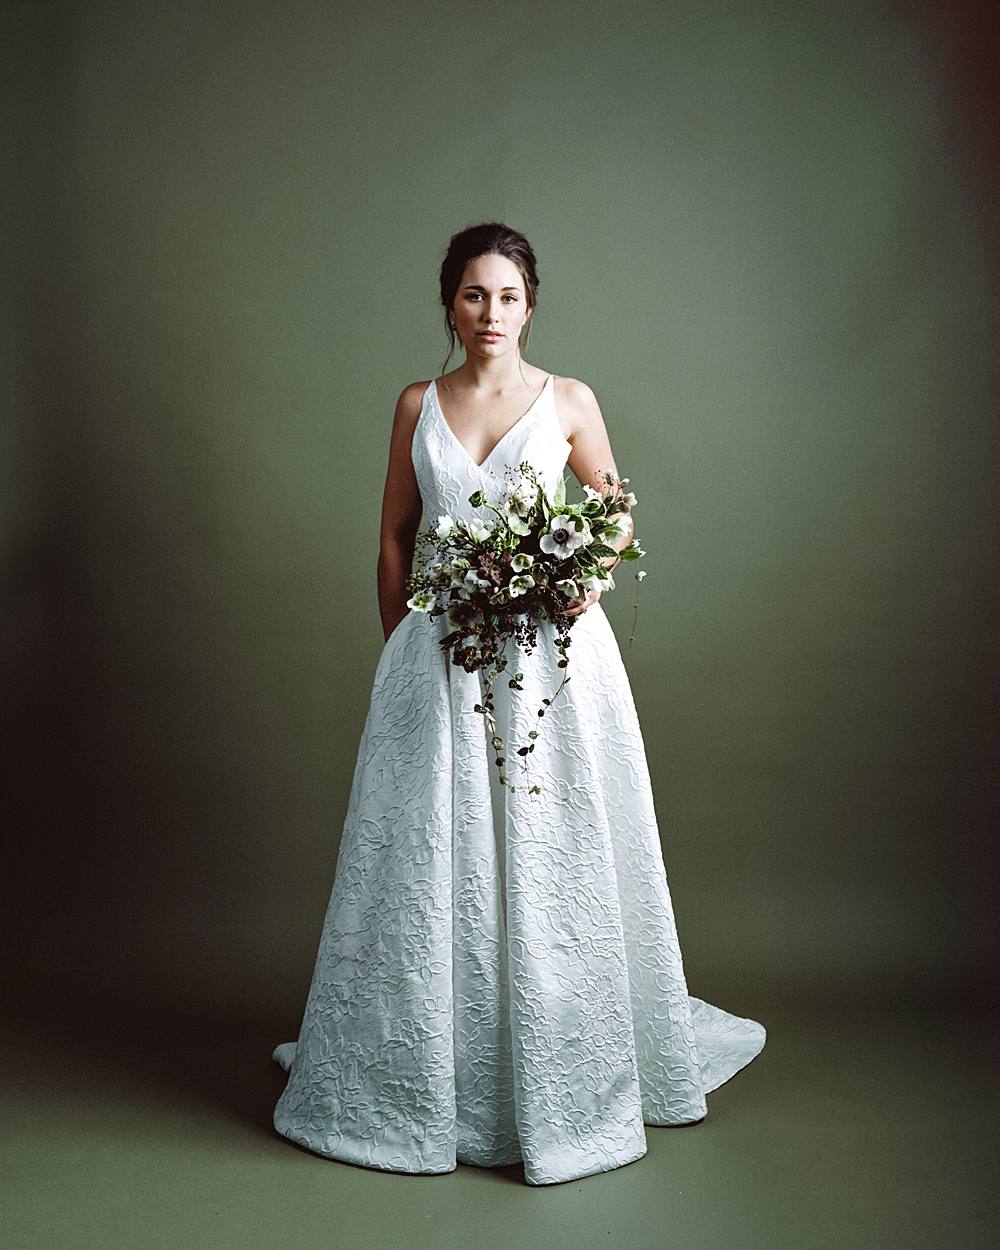 2002 charleston studio bridal portrait green seamless florals kodak portra 160 film strobes 00023_web